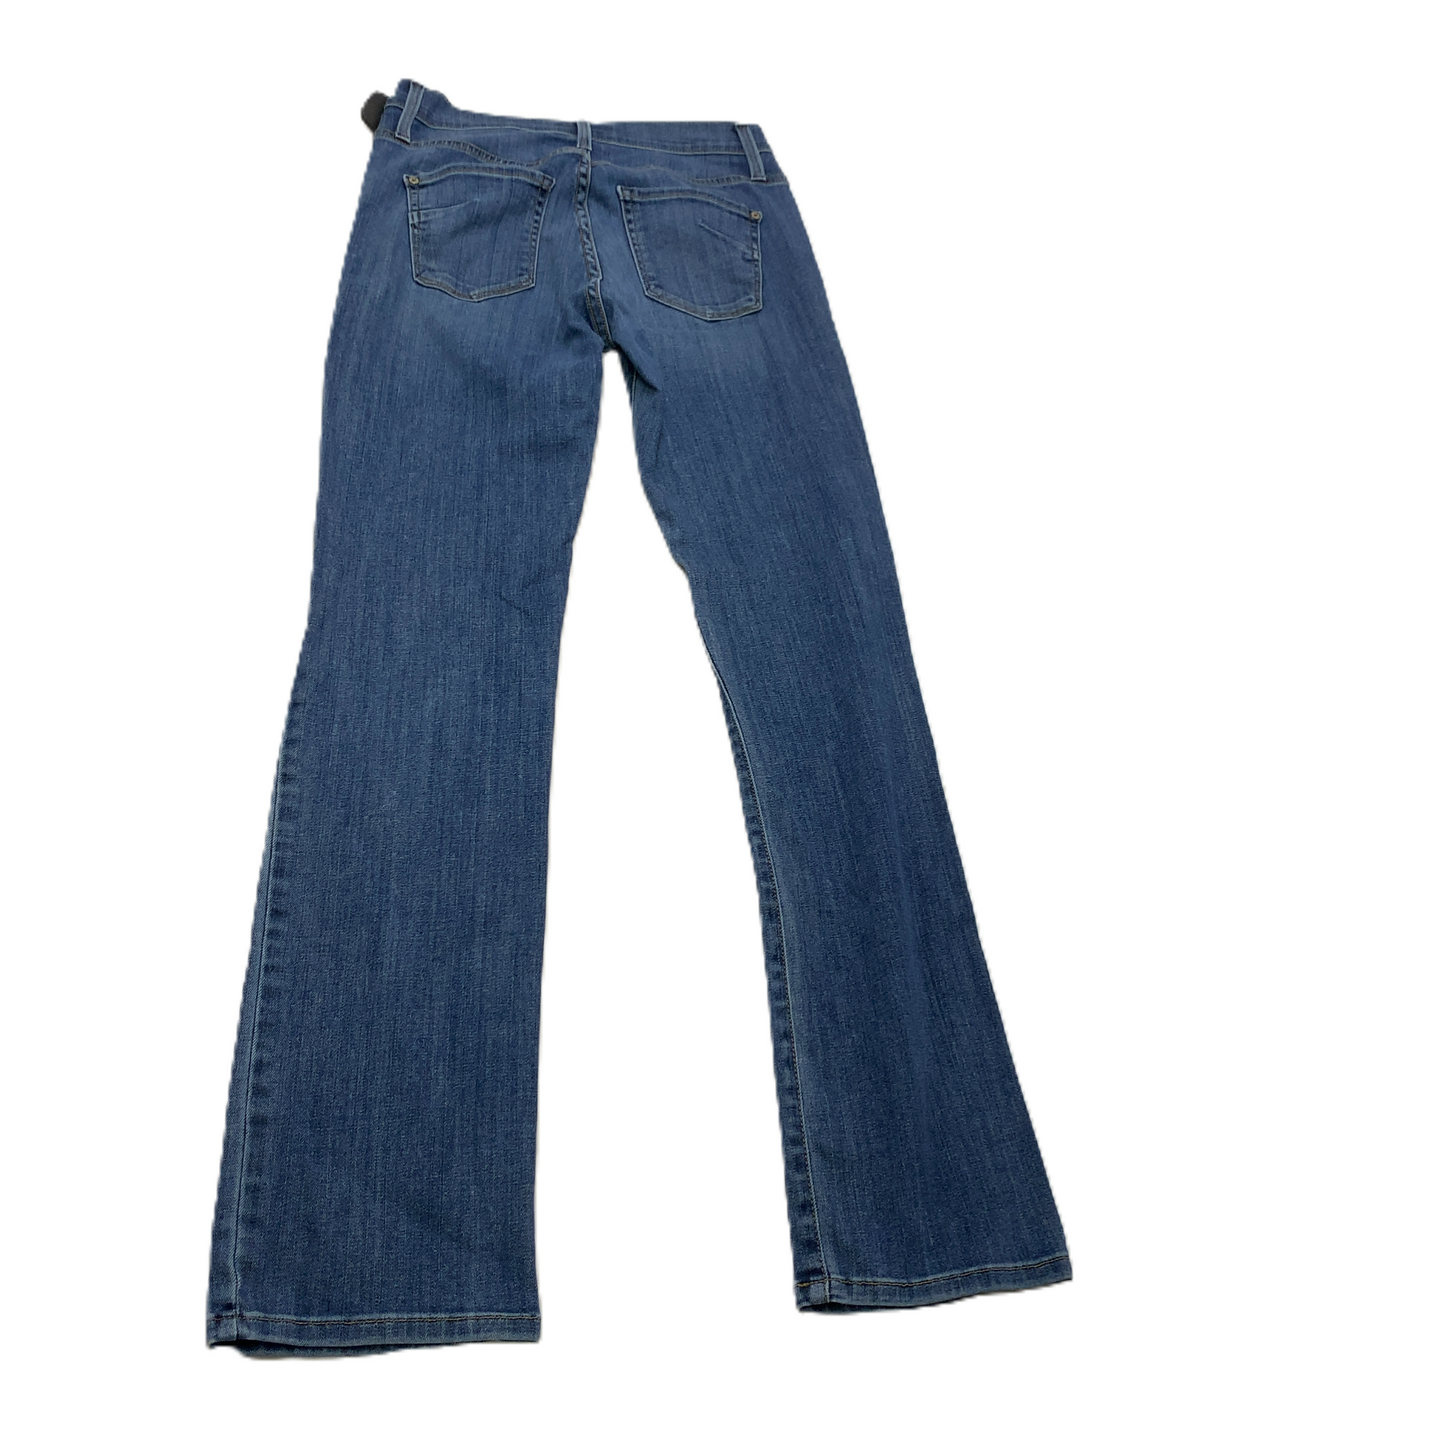 Jeans Designer By James Jeans  Size: 8